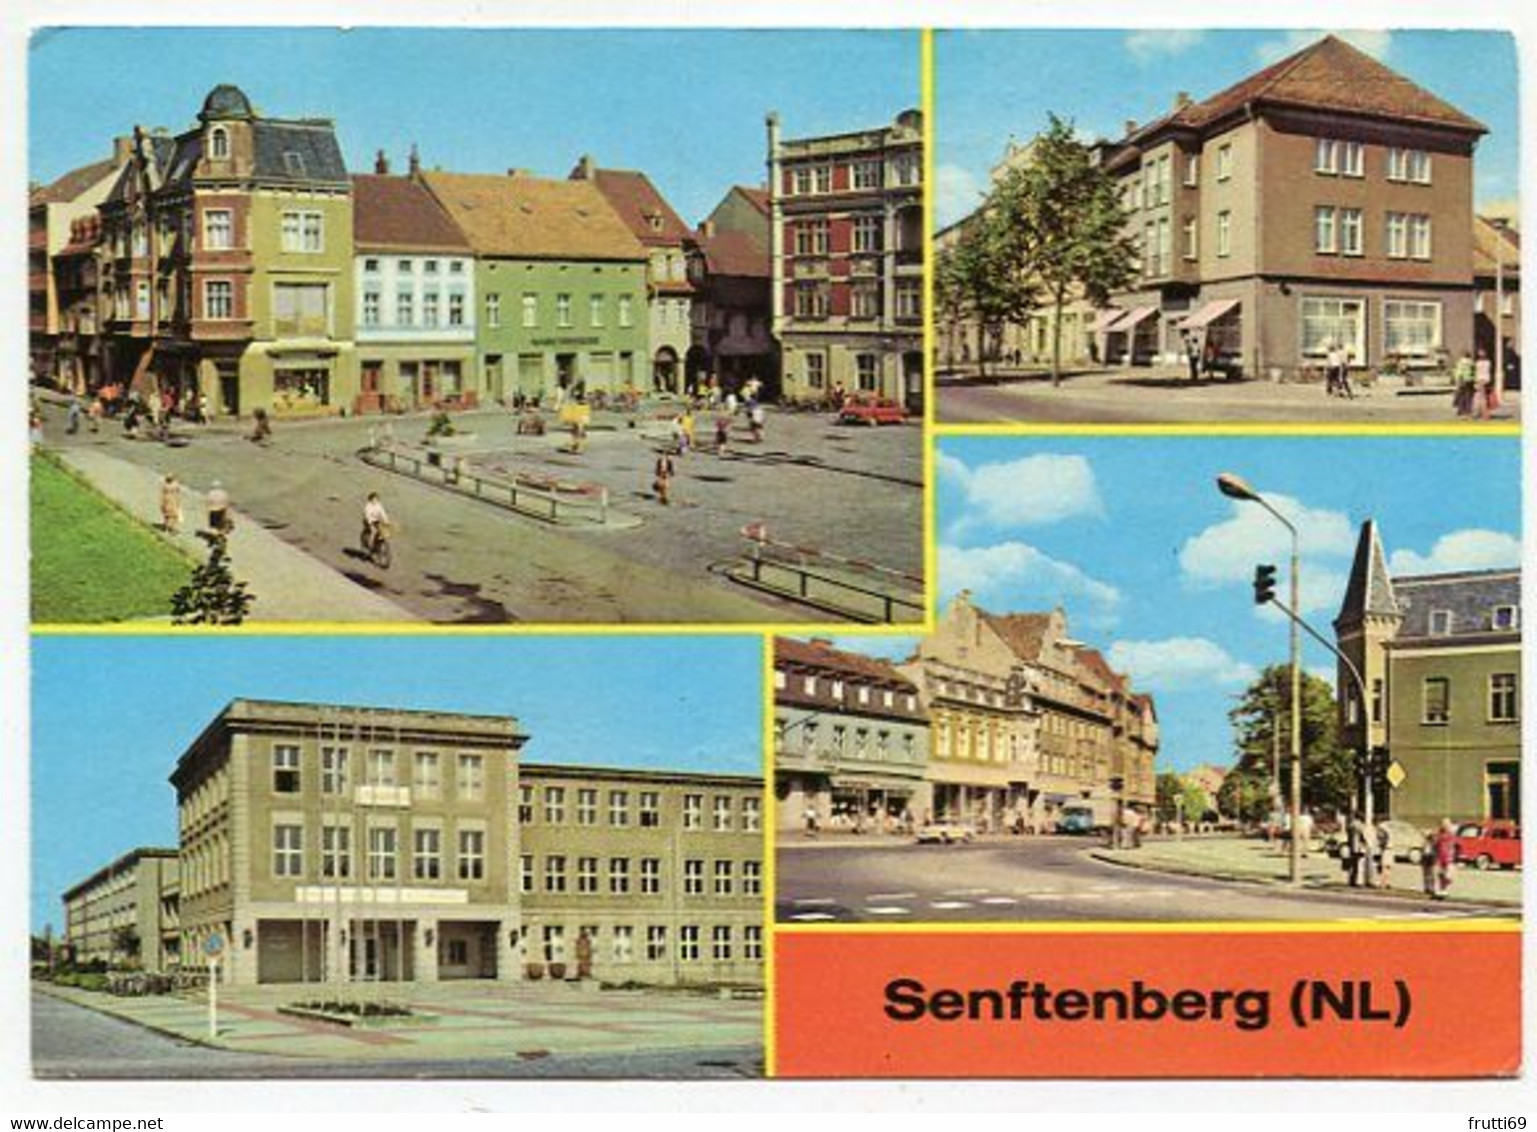 AK 041988 GERMANY - Senftenberg / NL - Senftenberg